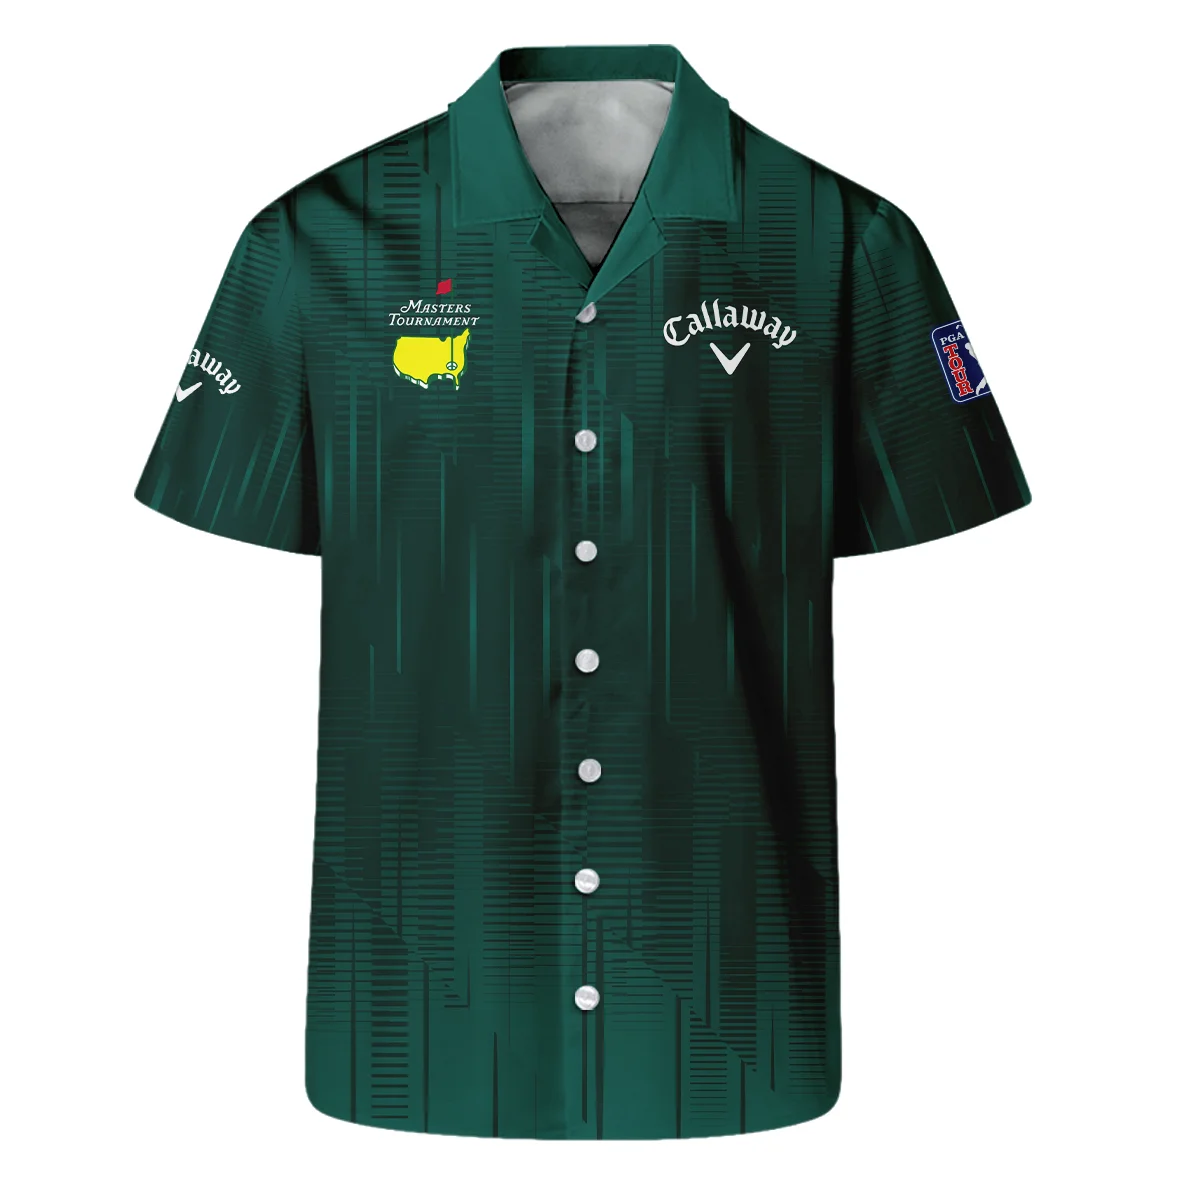 Masters Tournament Callaway Dark Green Gradient Stripes Pattern Bomber Jacket Style Classic Bomber Jacket